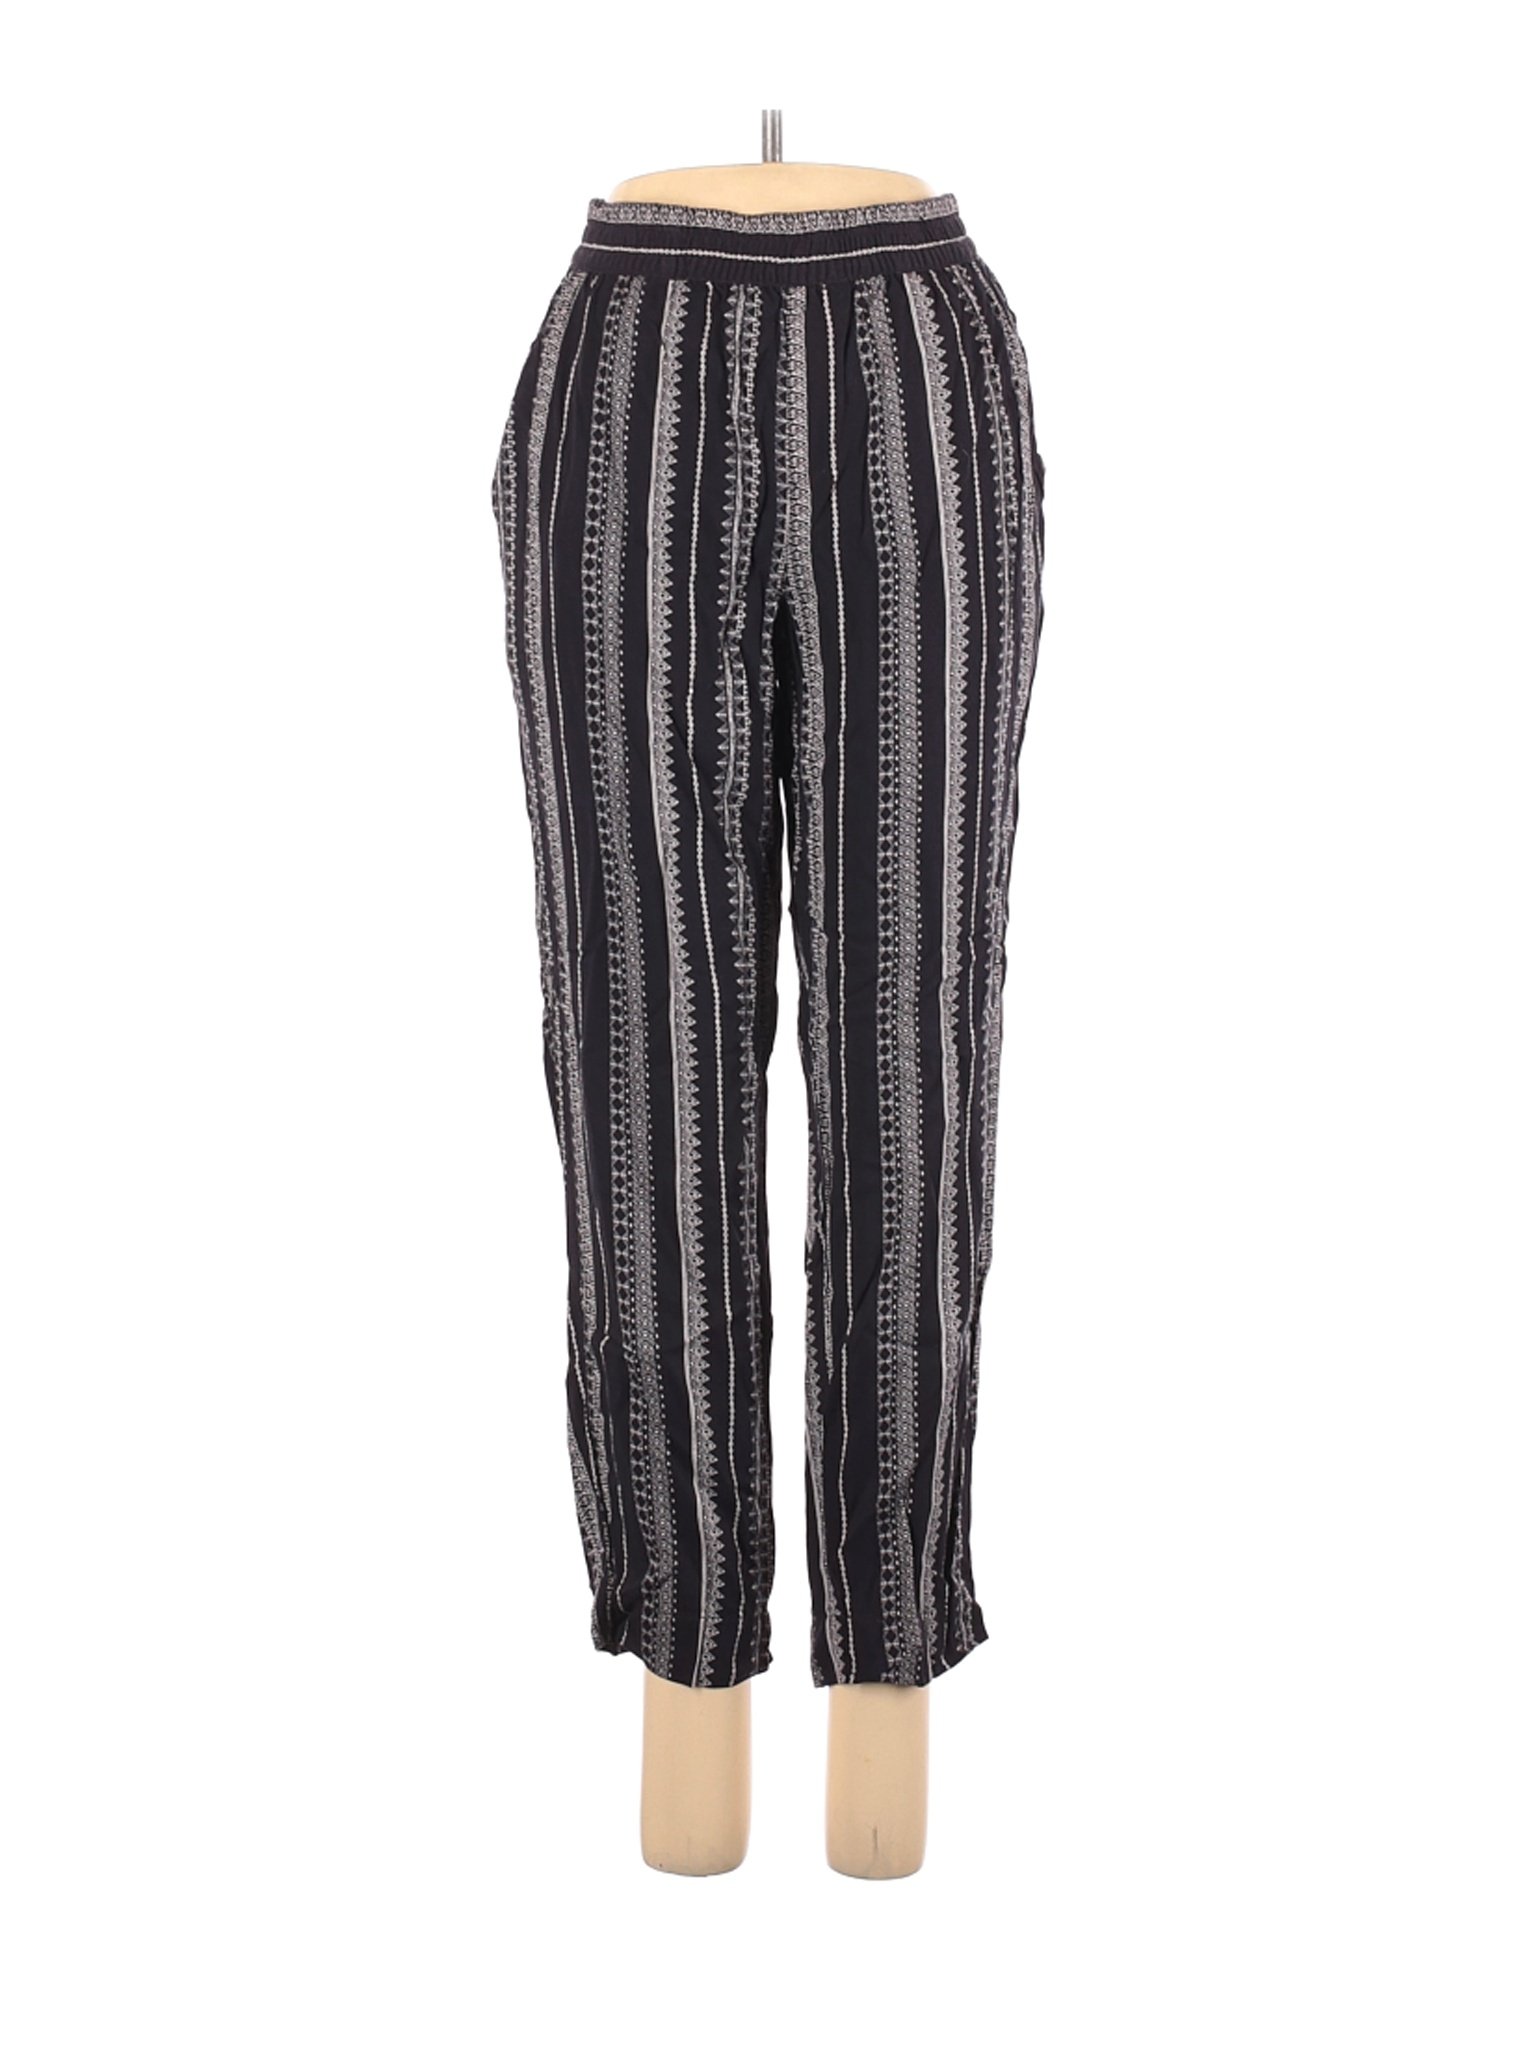 Jessica Simpson Women Black Casual Pants S | eBay